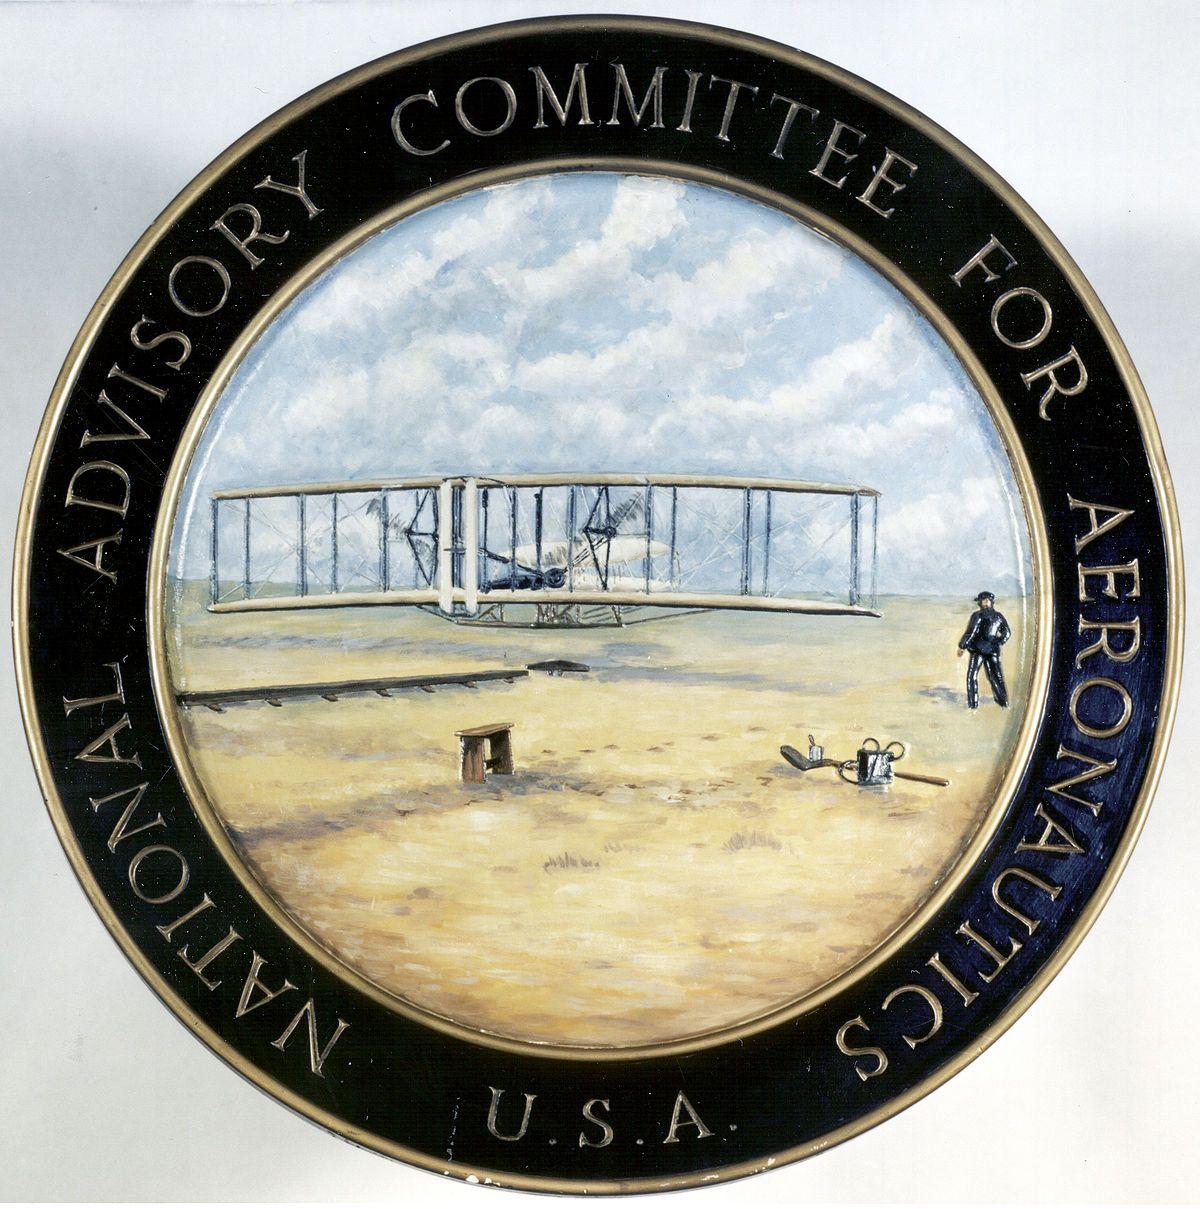 NACA Logo - National Advisory Committee for Aeronautics